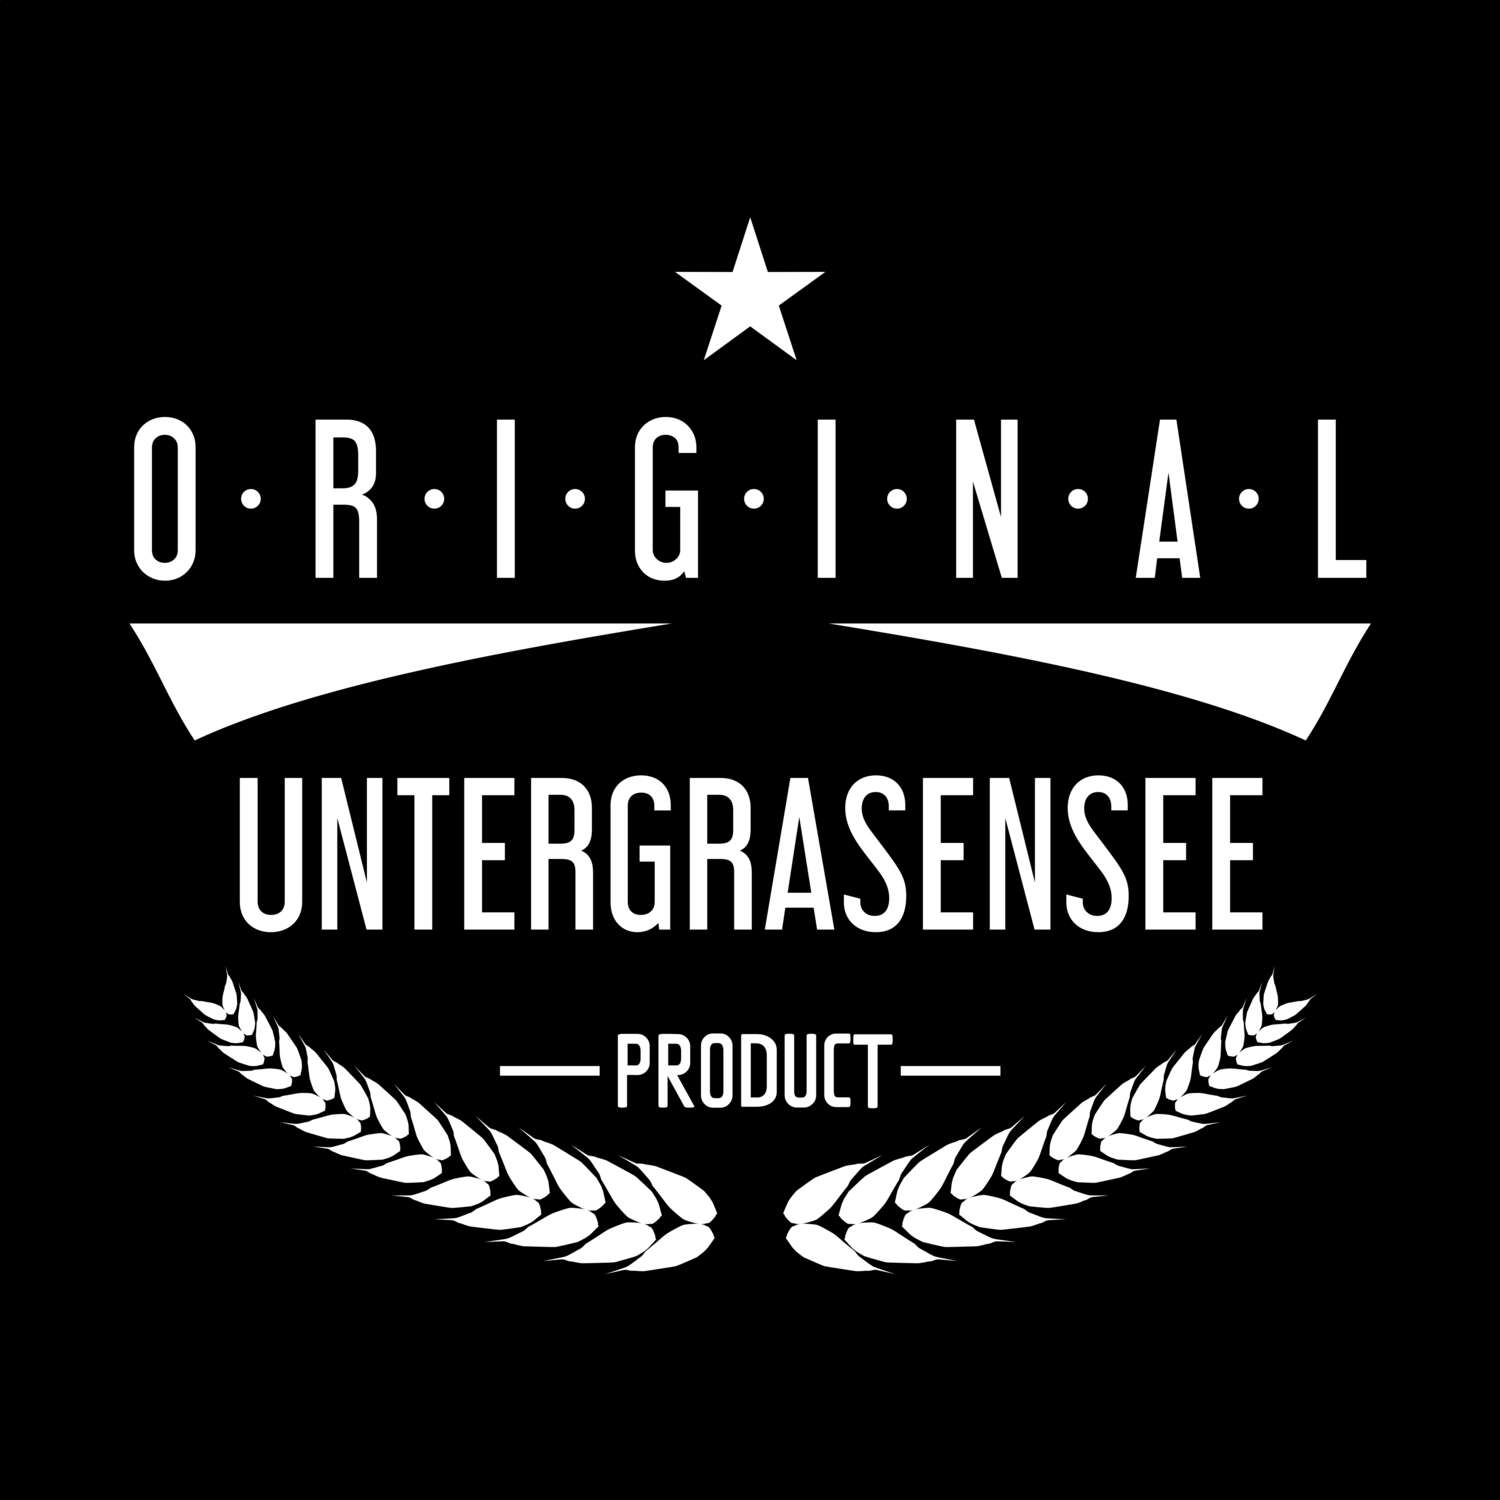 Untergrasensee T-Shirt »Original Product«